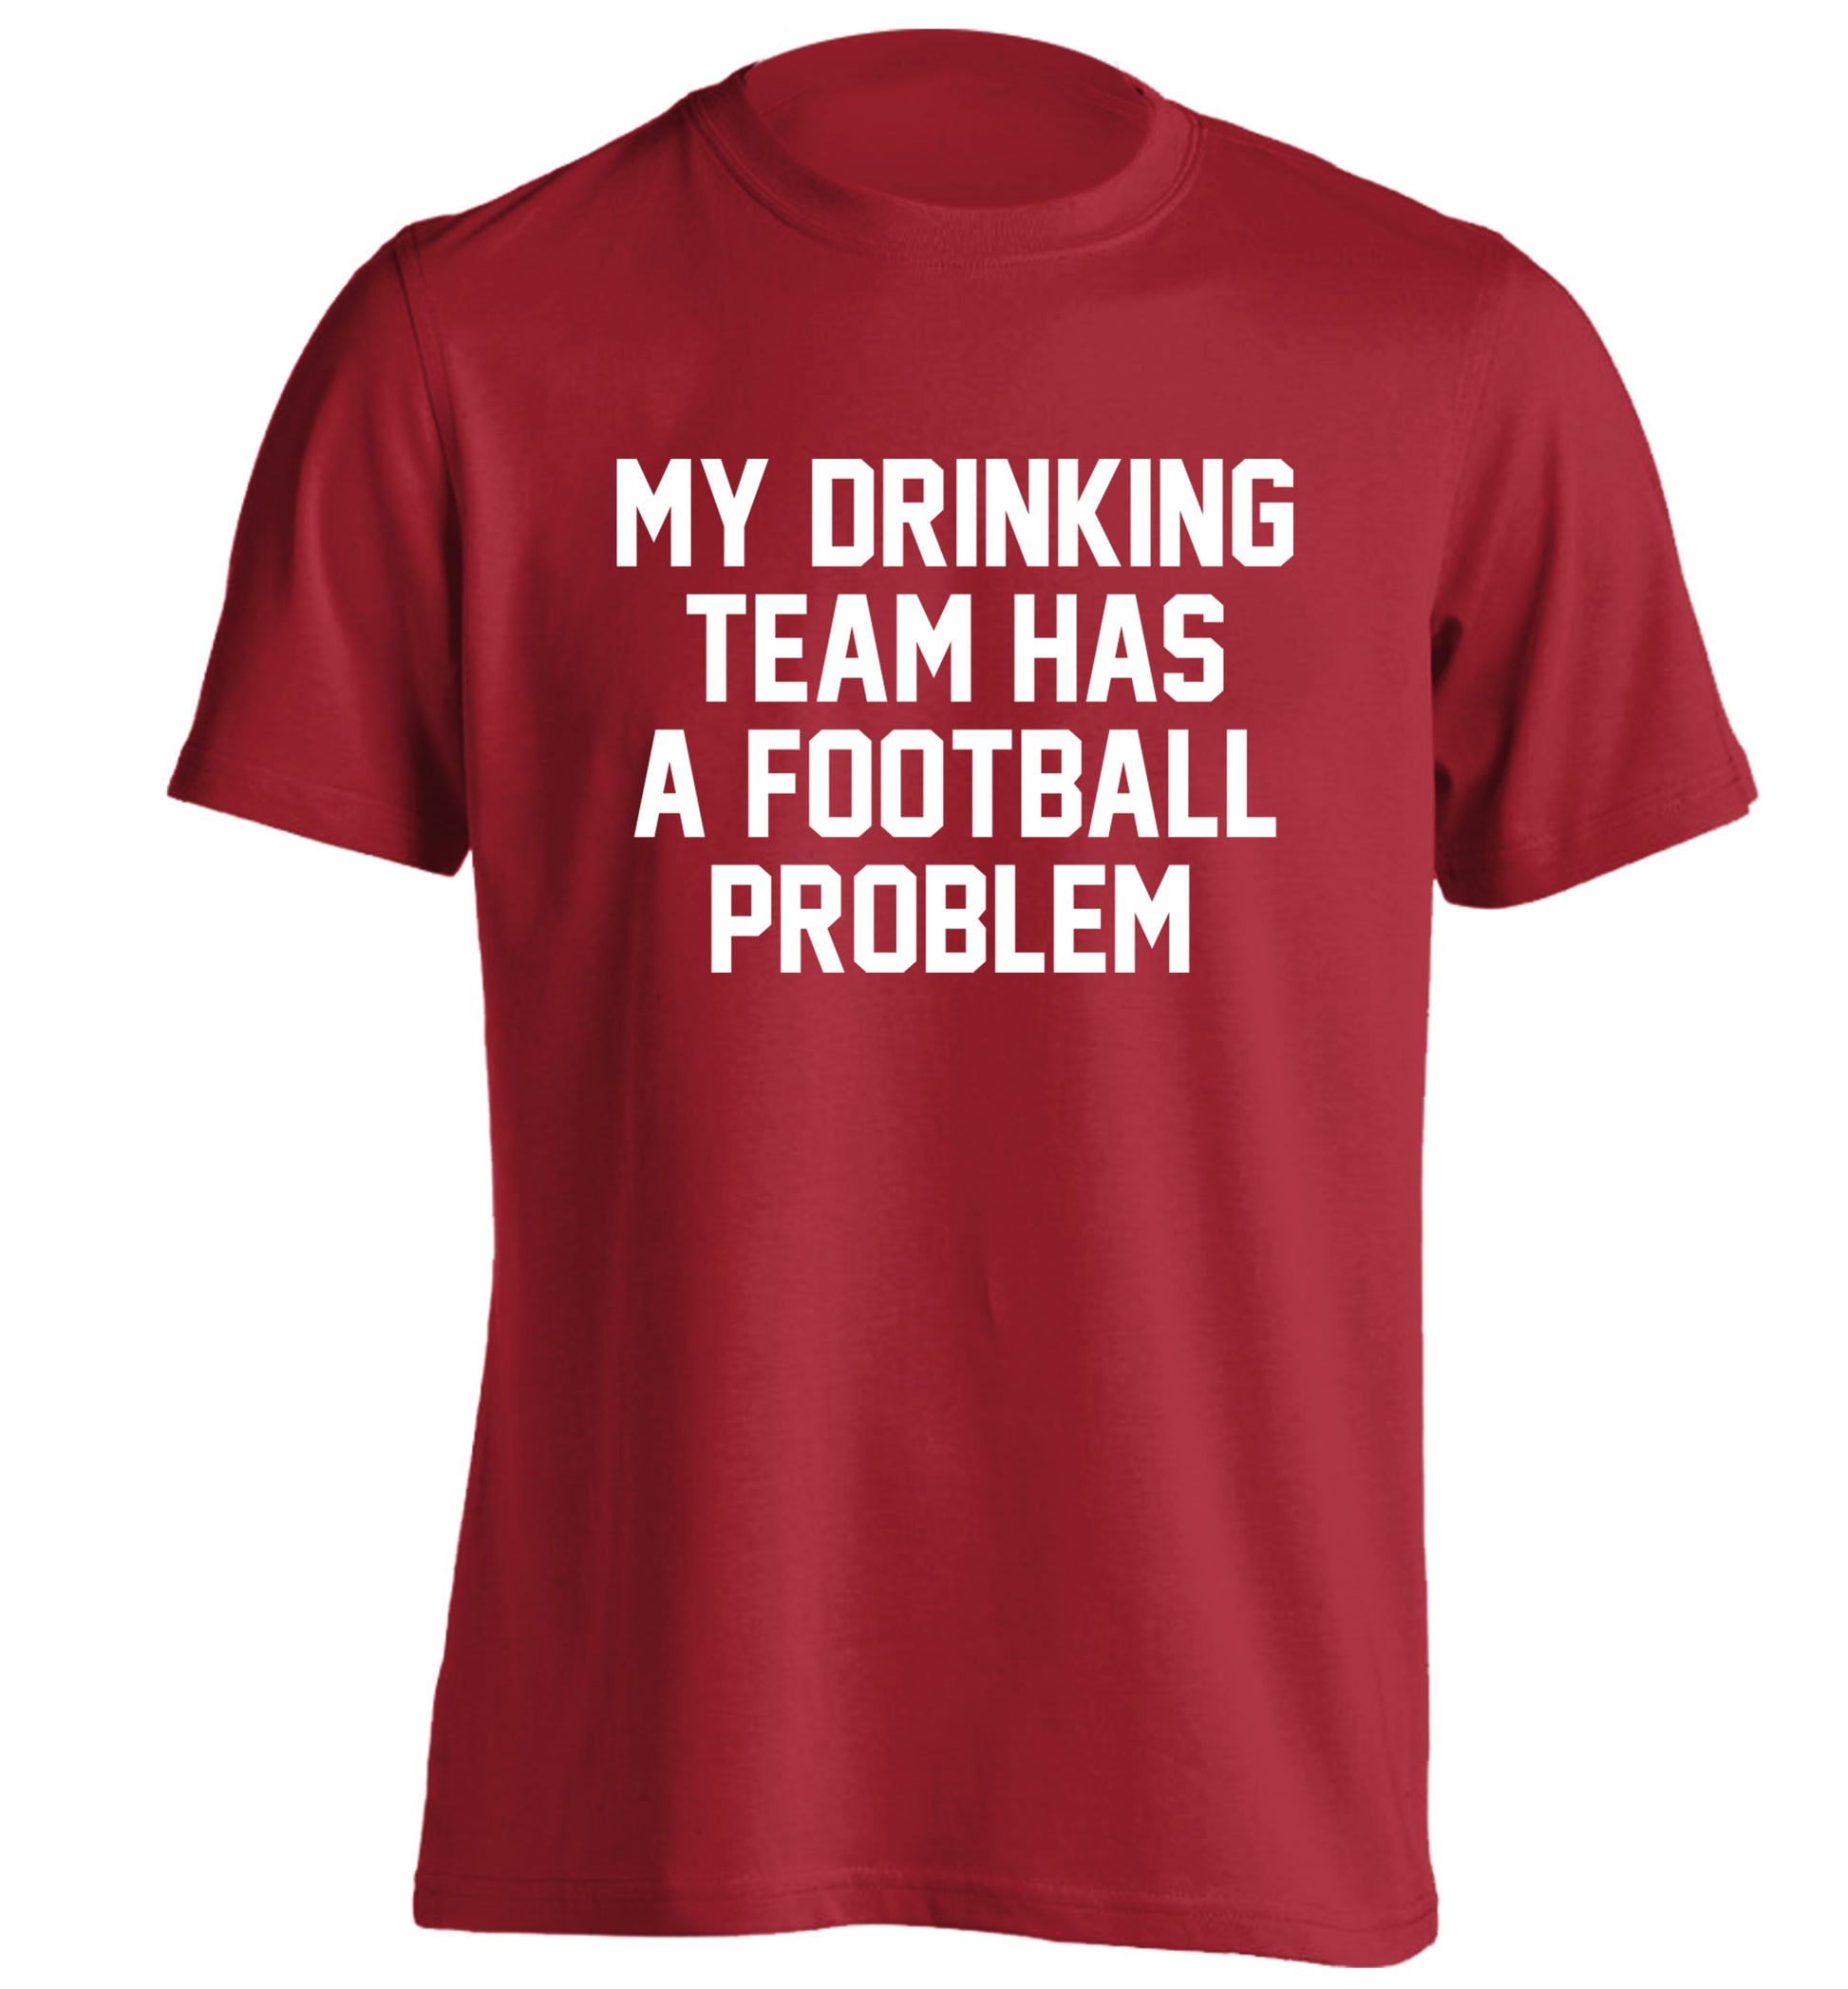 My drinking team has a football problem! adults unisexred Tshirt 2XL